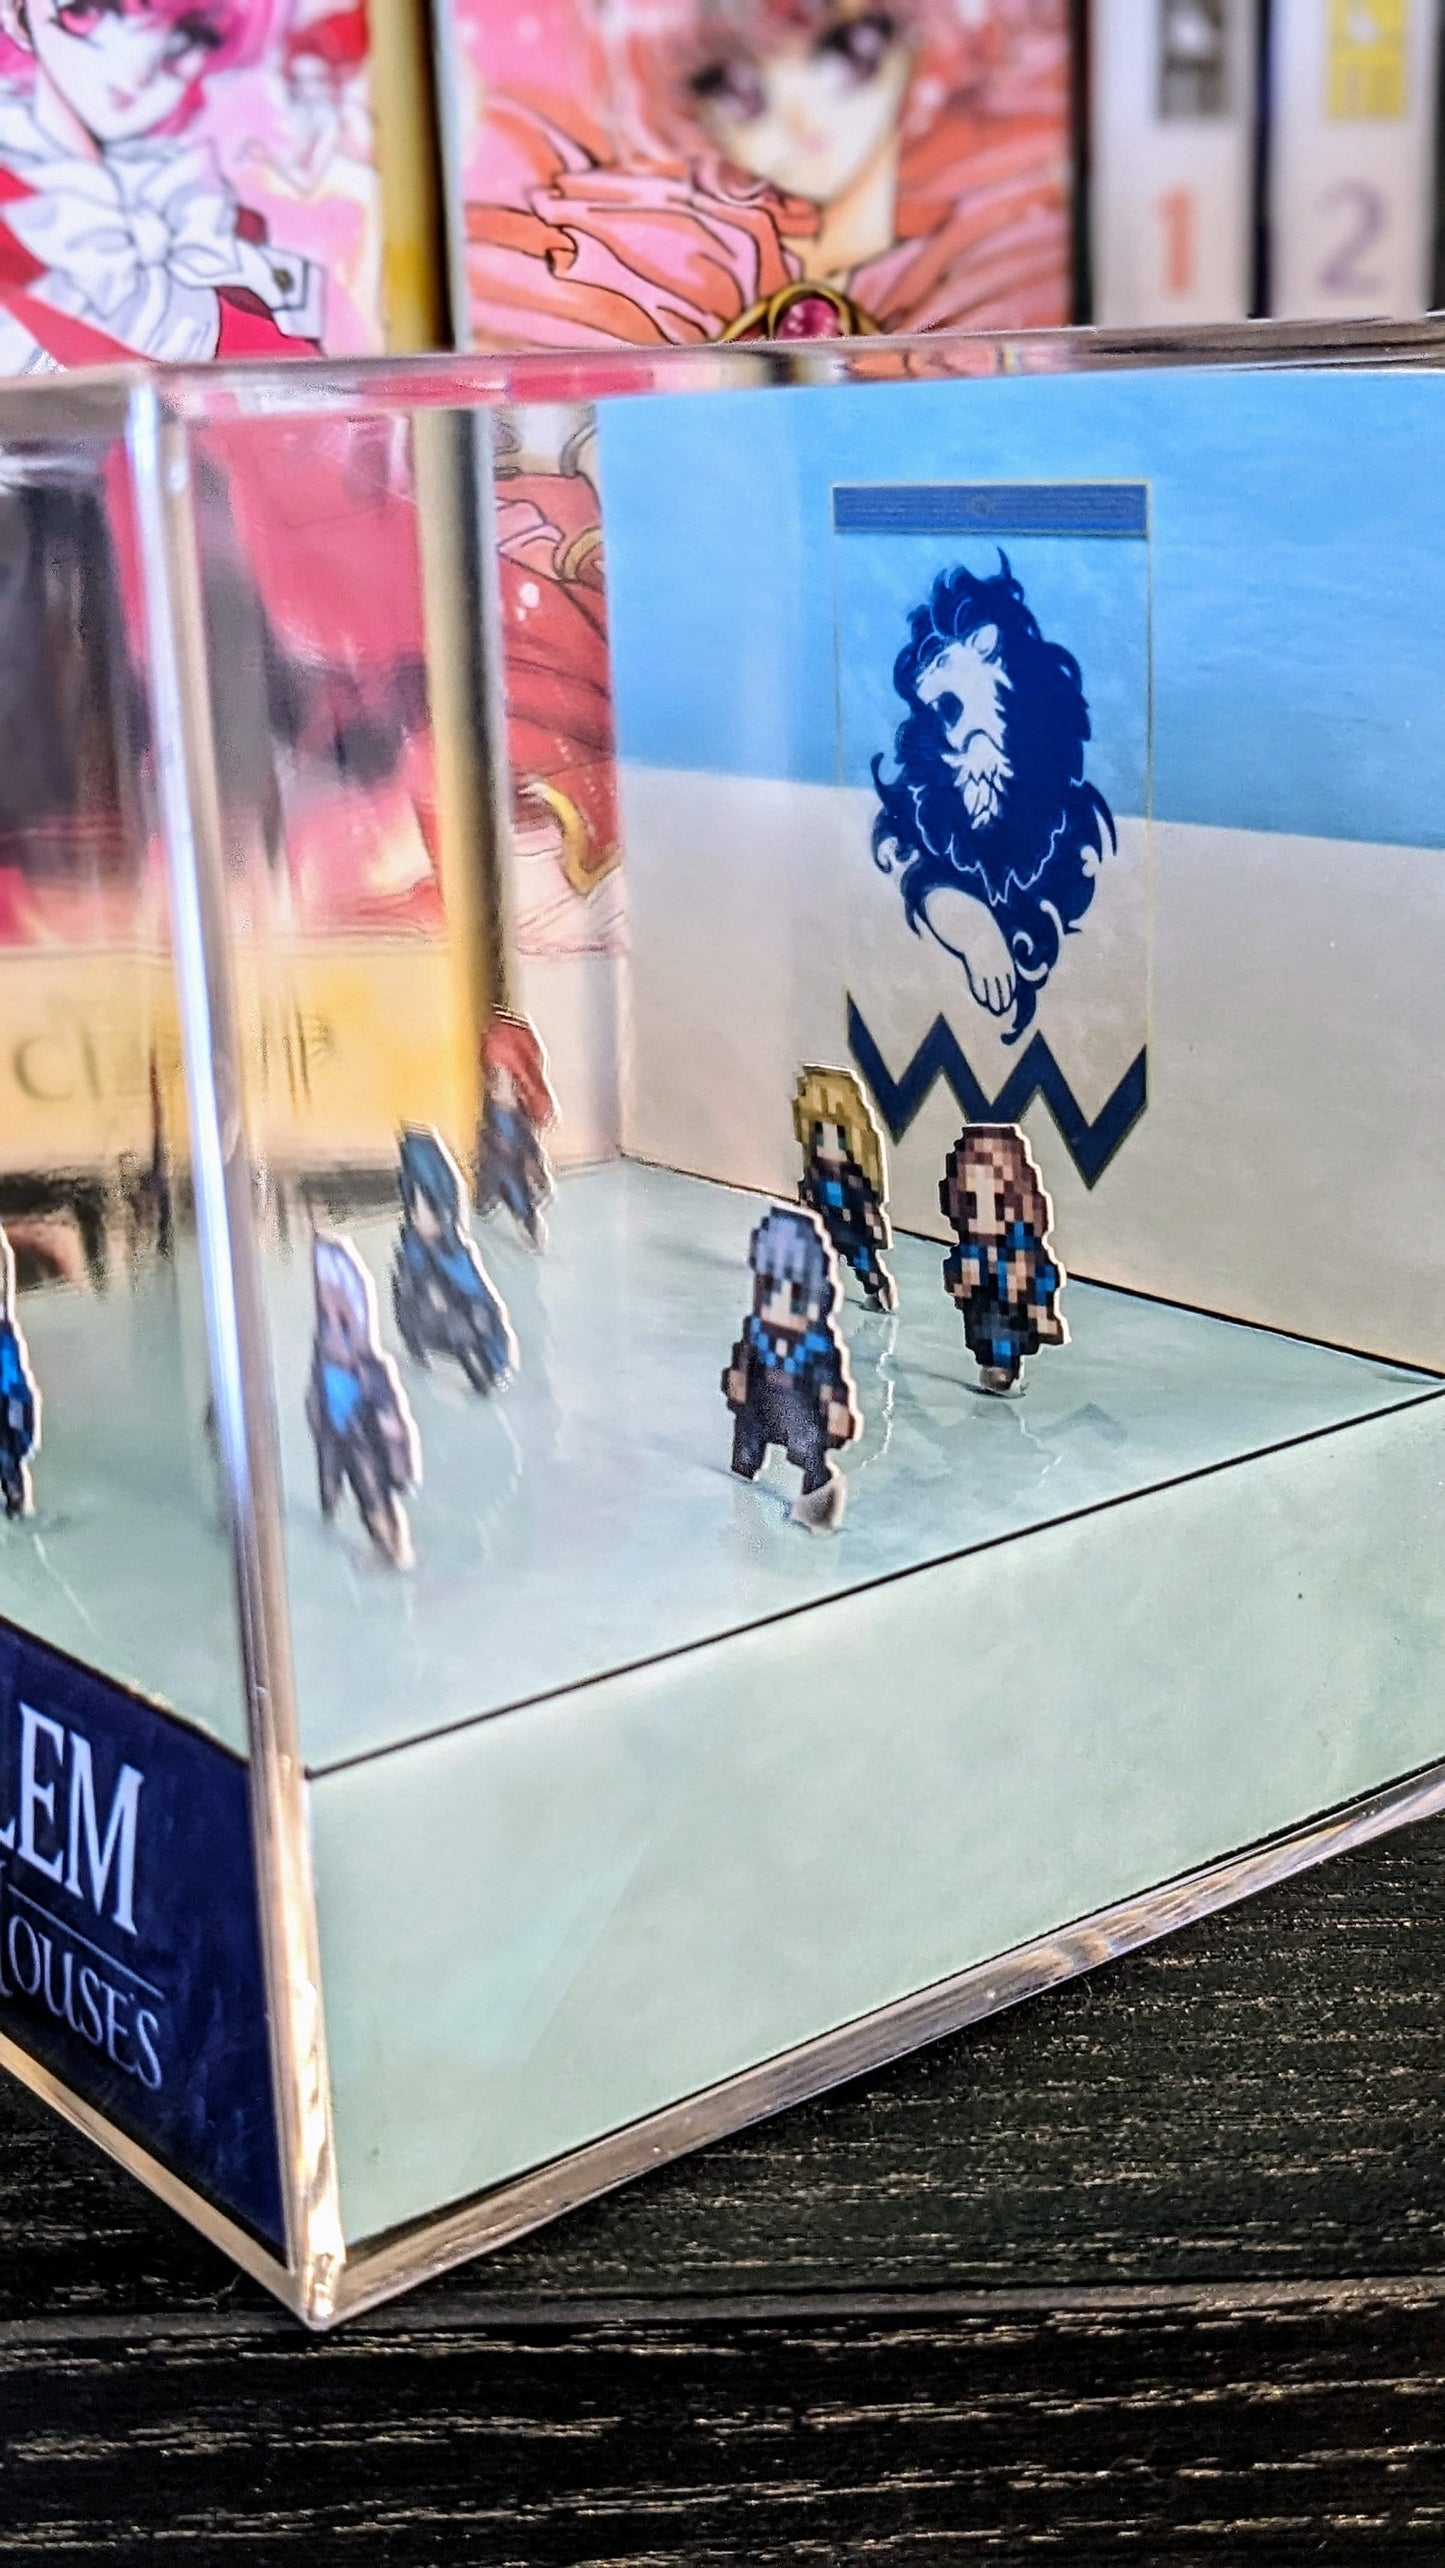 Fire Emblem Three Houses Blue Lions 3D cube diorama